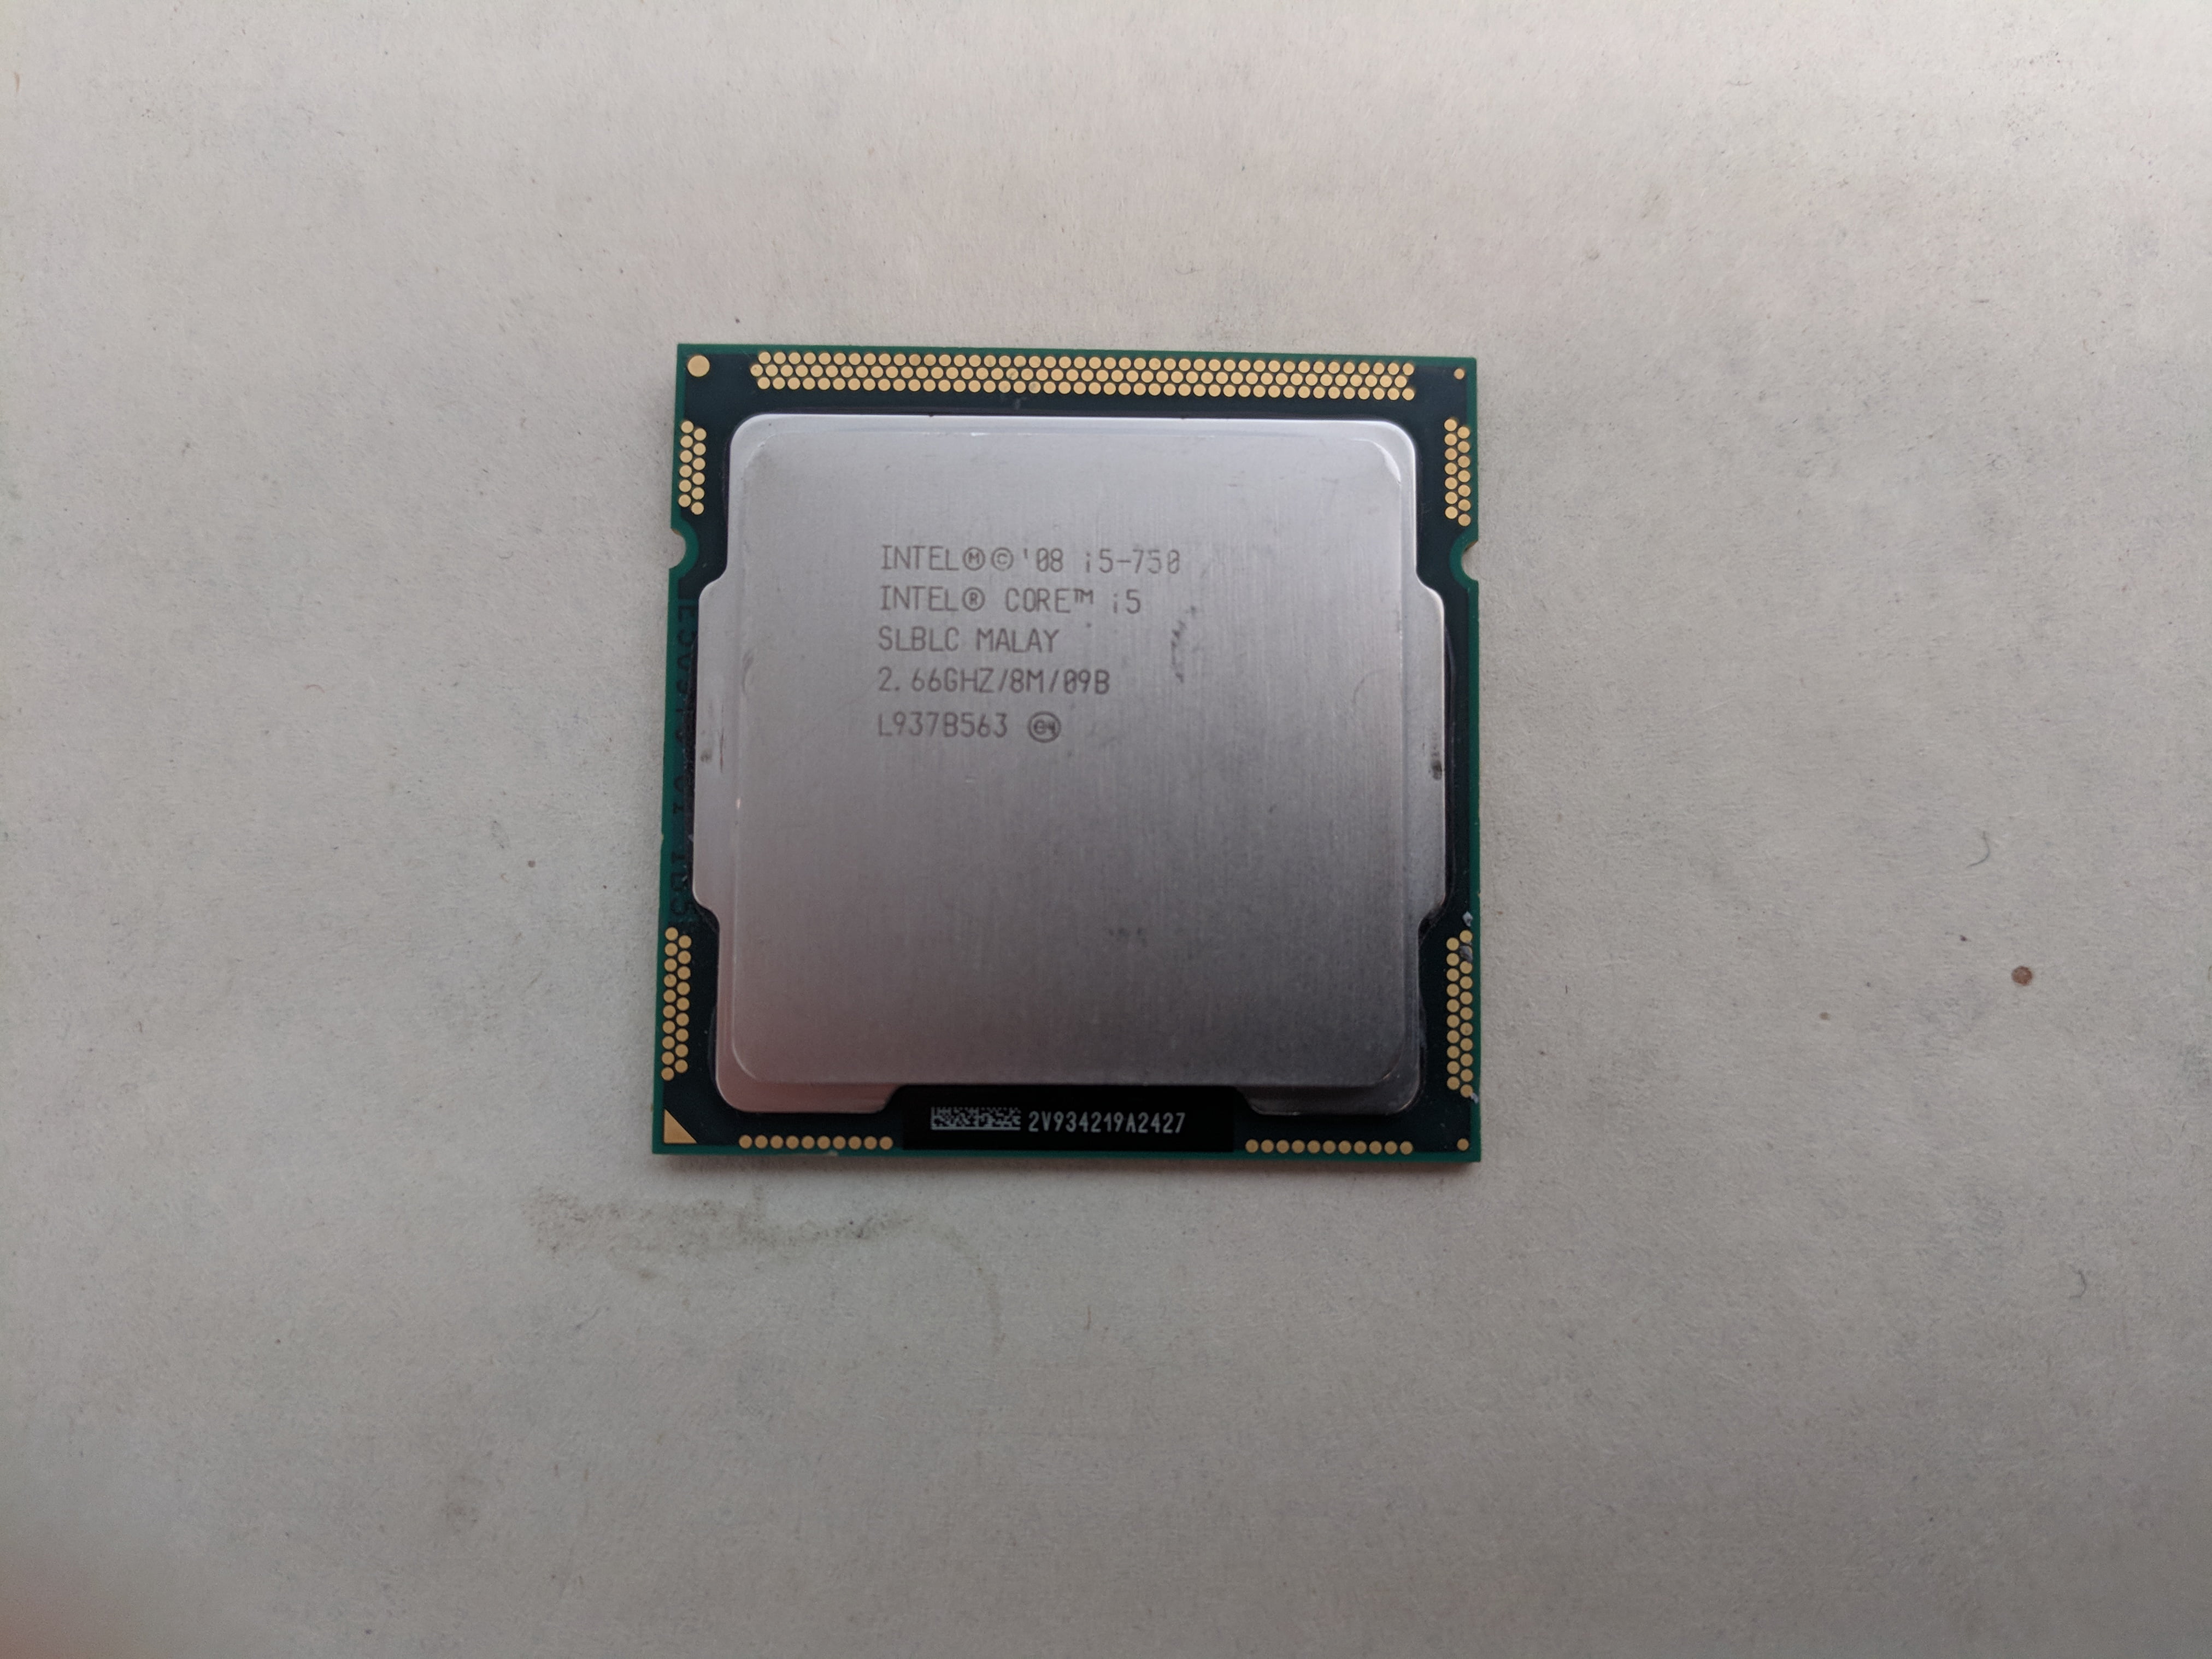 Intel Core i5 750.